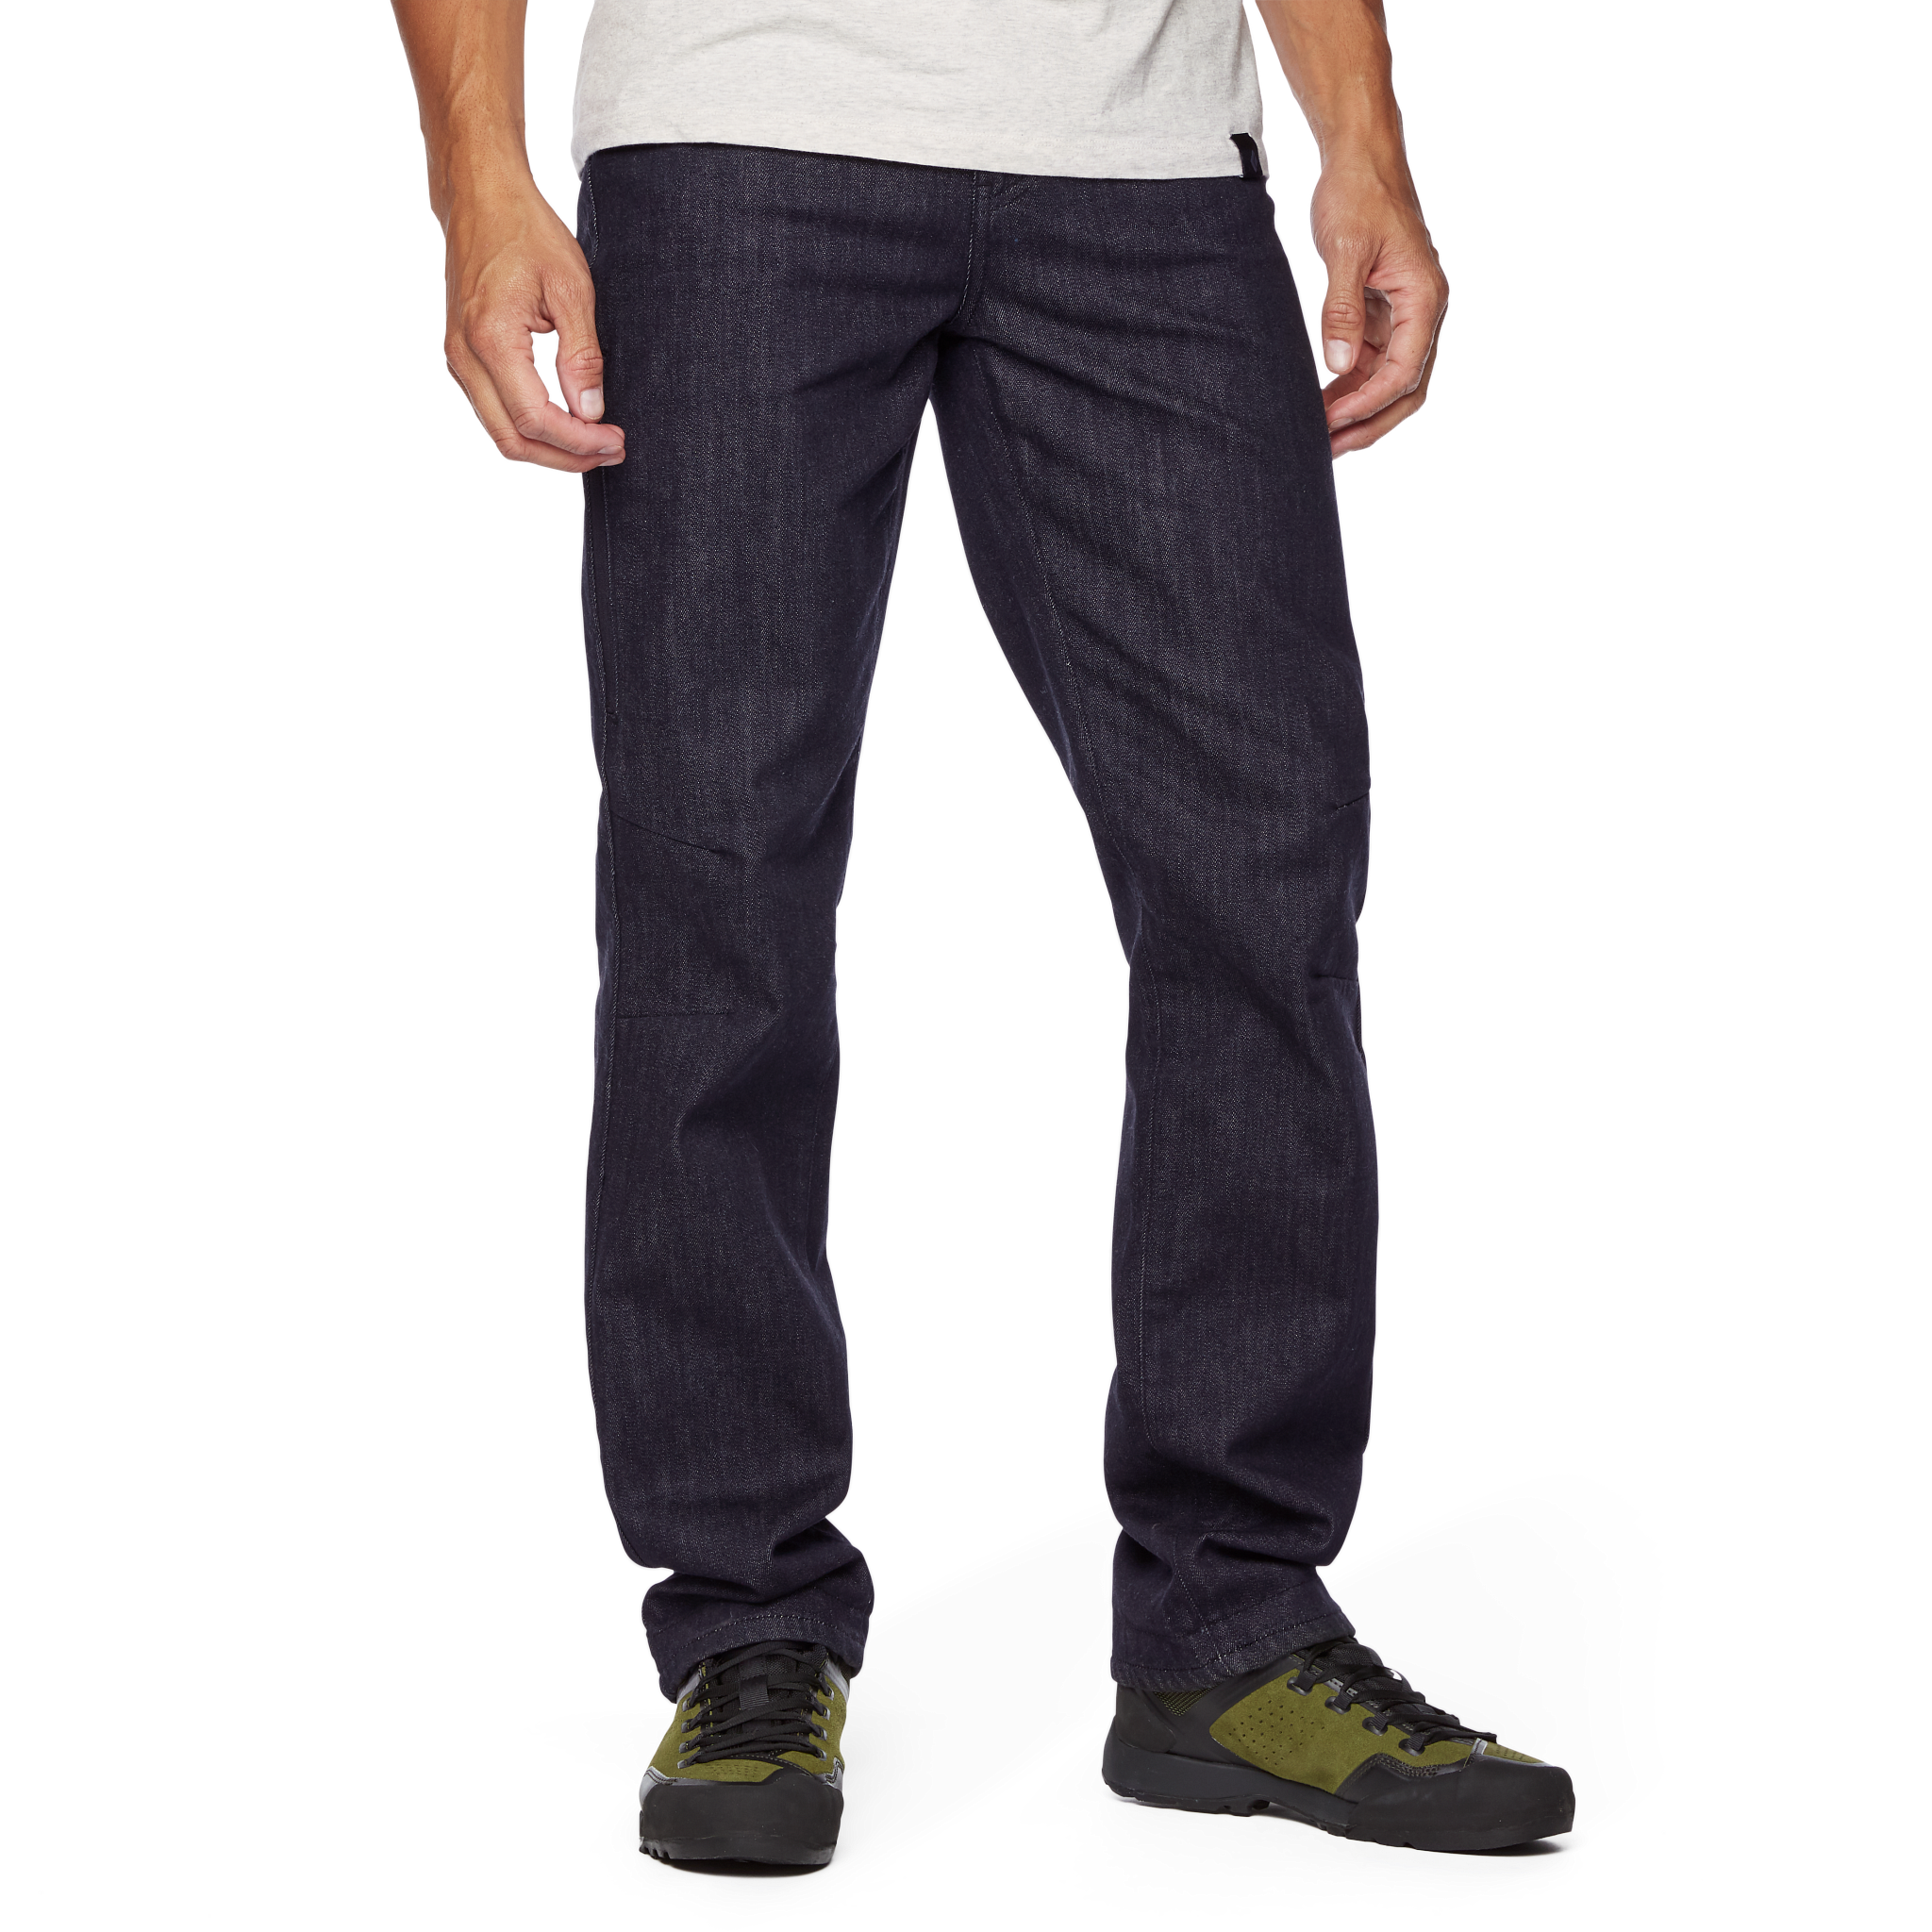 Black Diamond Equipment Men's Mission Wool Denim Pants Size 30, in Dark Grey